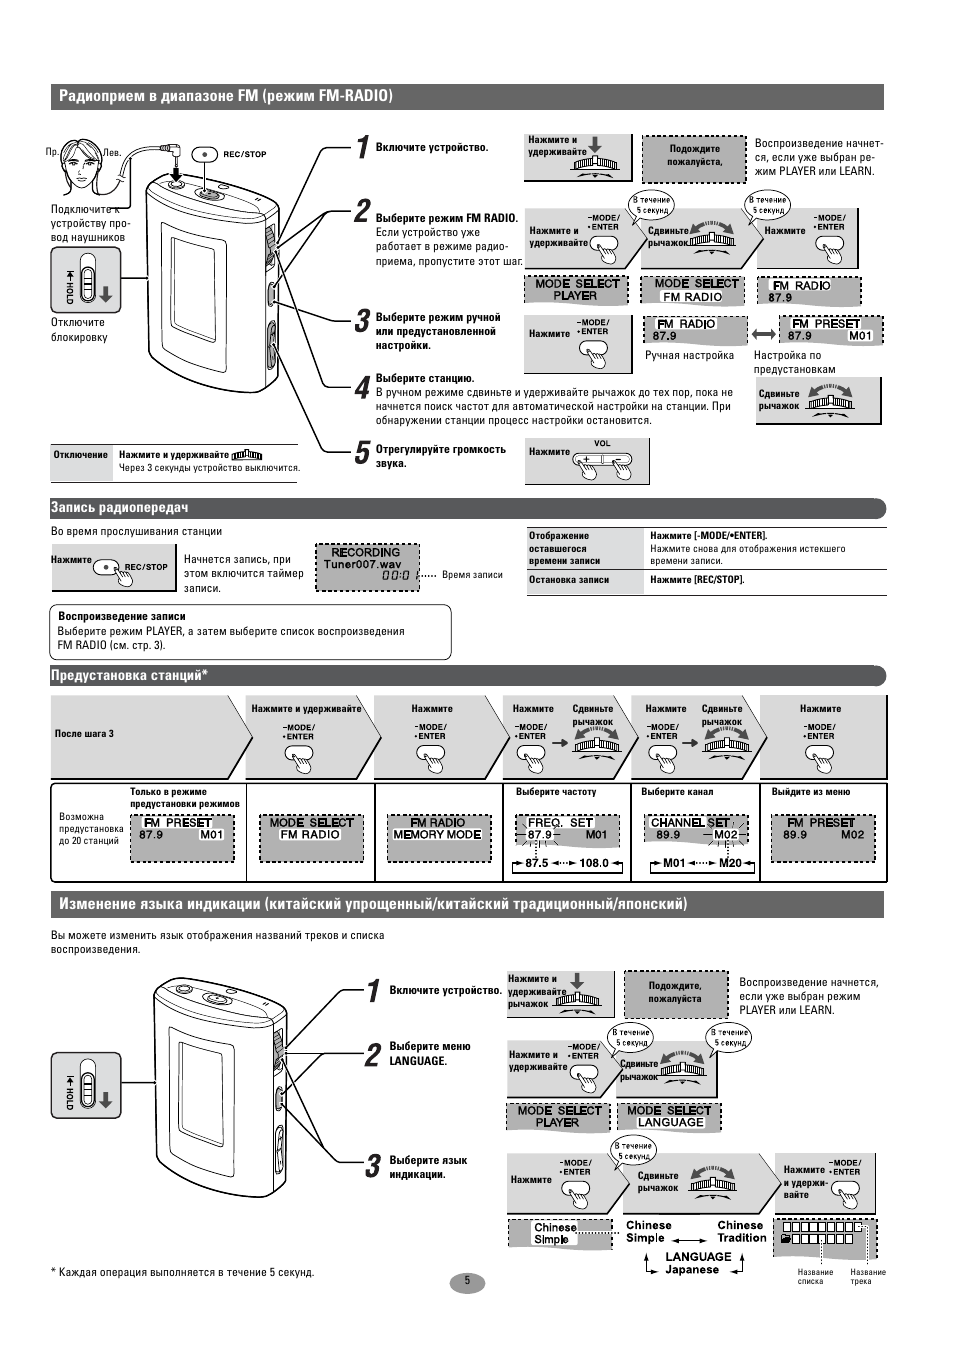 Радиоприем в диапазоне fm (режим fm-radio), Aa-a | Инструкция по эксплуатации Panasonic SV-MP31V | Страница 5 / 6